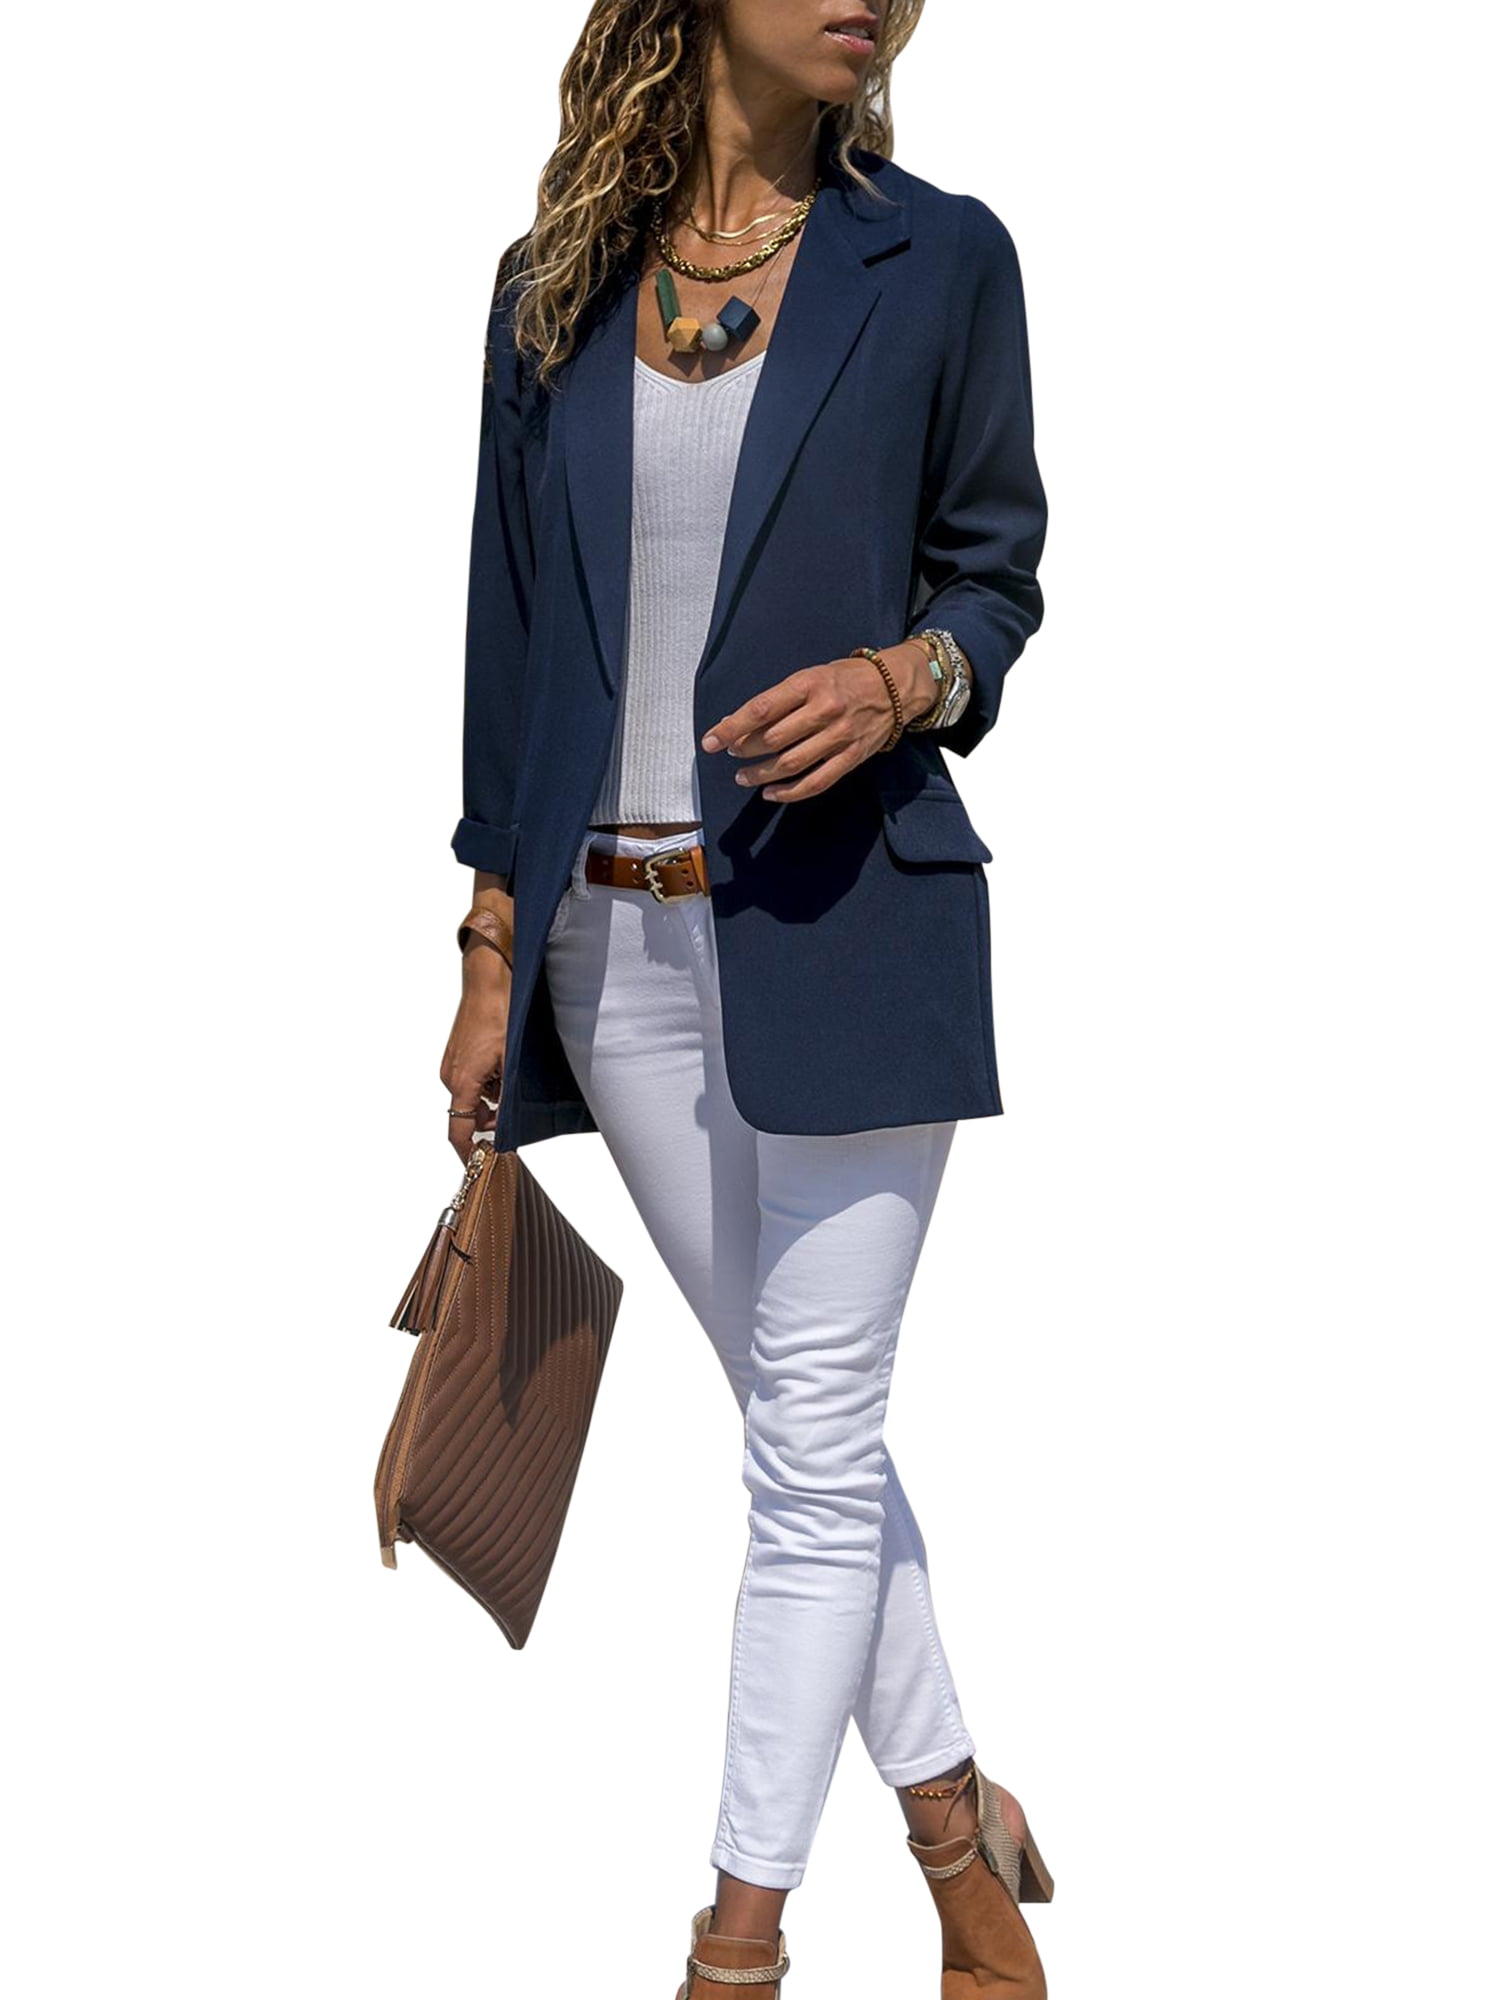 Women Ladies Long Sleeve Solid Color Stylish Duster Blazer Jacket Coat 